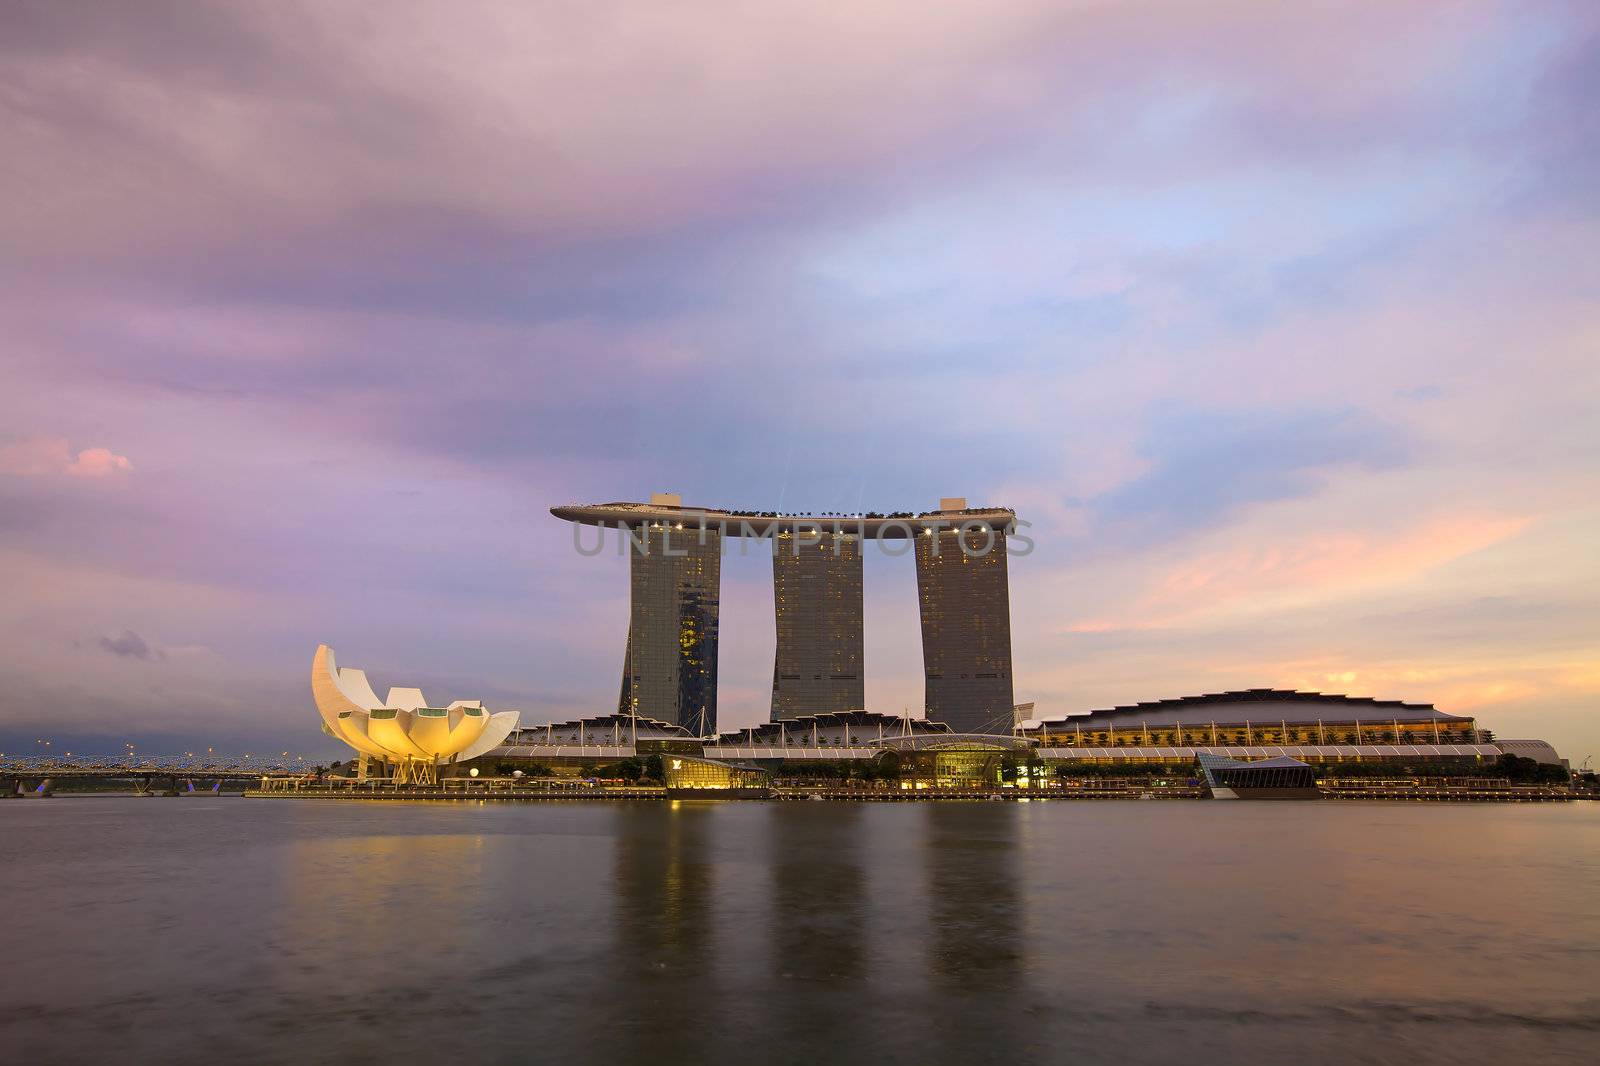 Singapore skyline by kjorgen